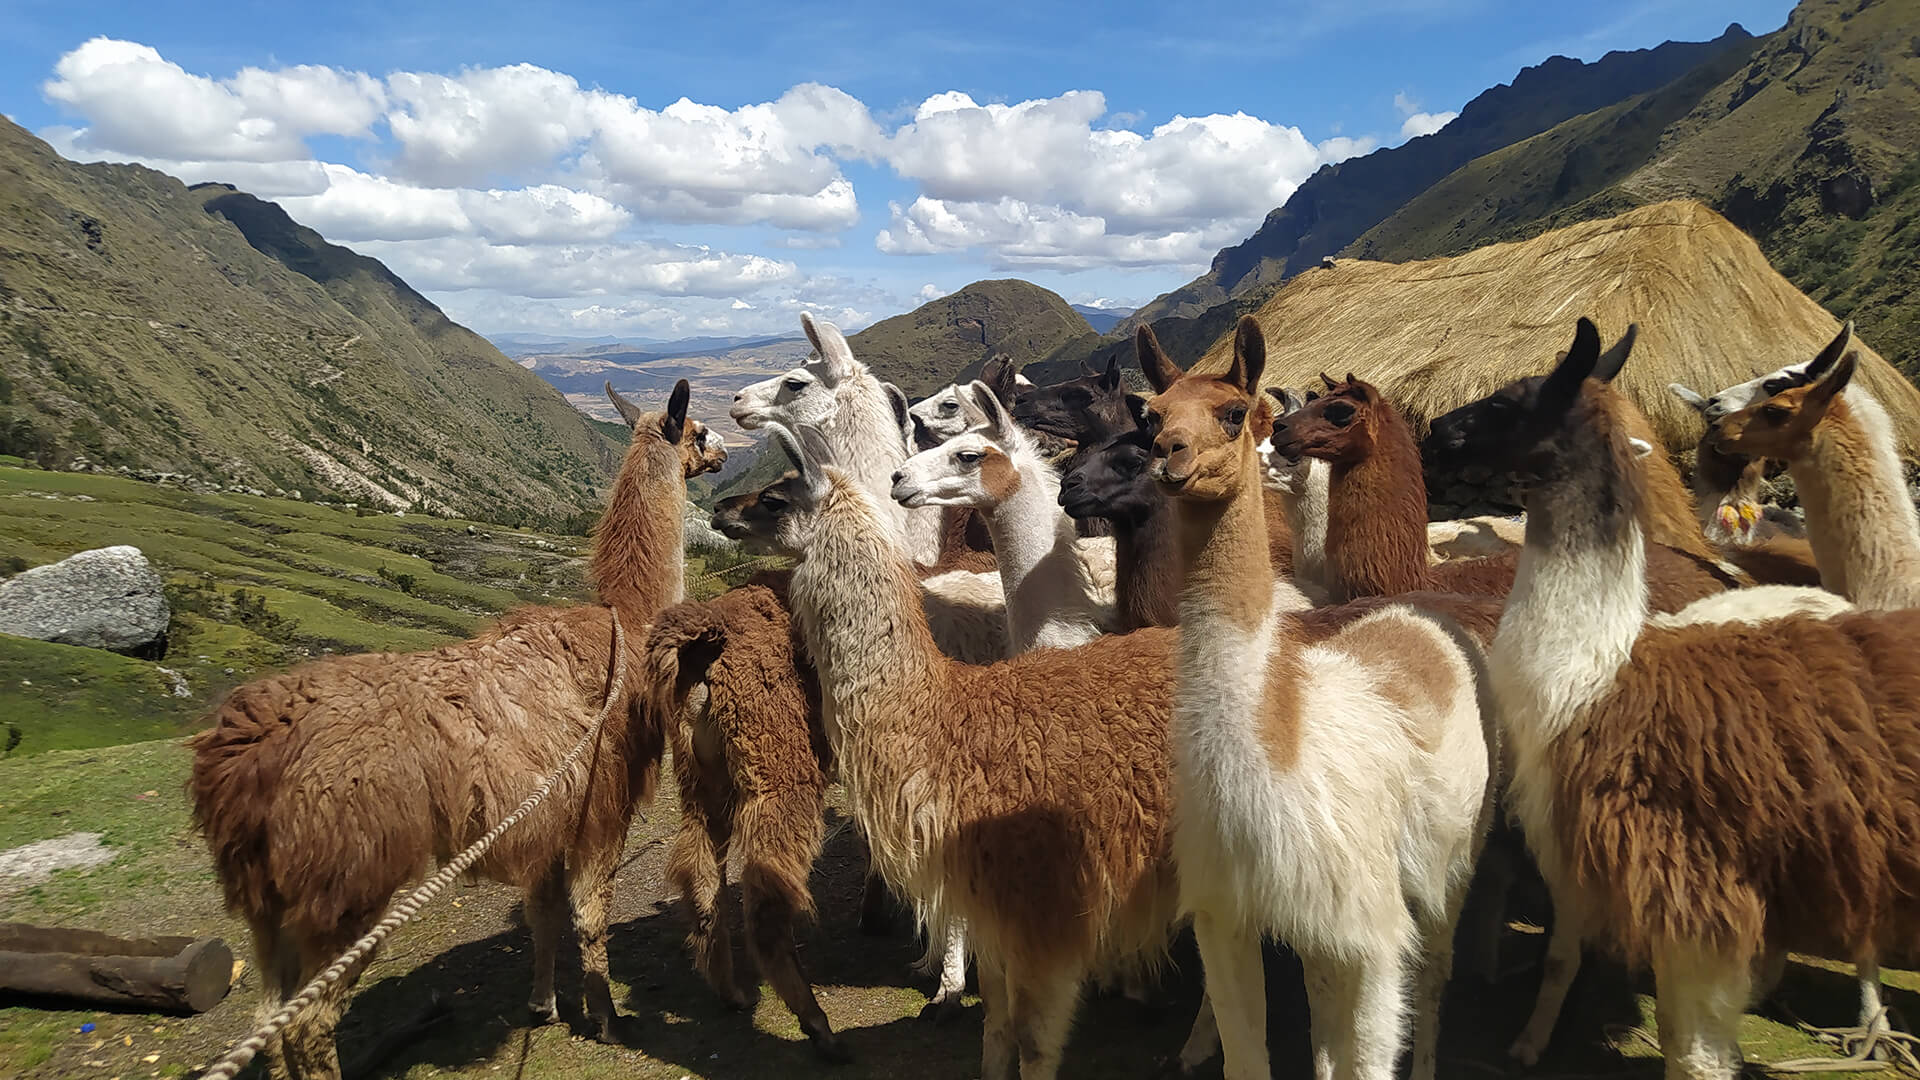 about 16 llamas next to villager hut at Pumahuaca valley